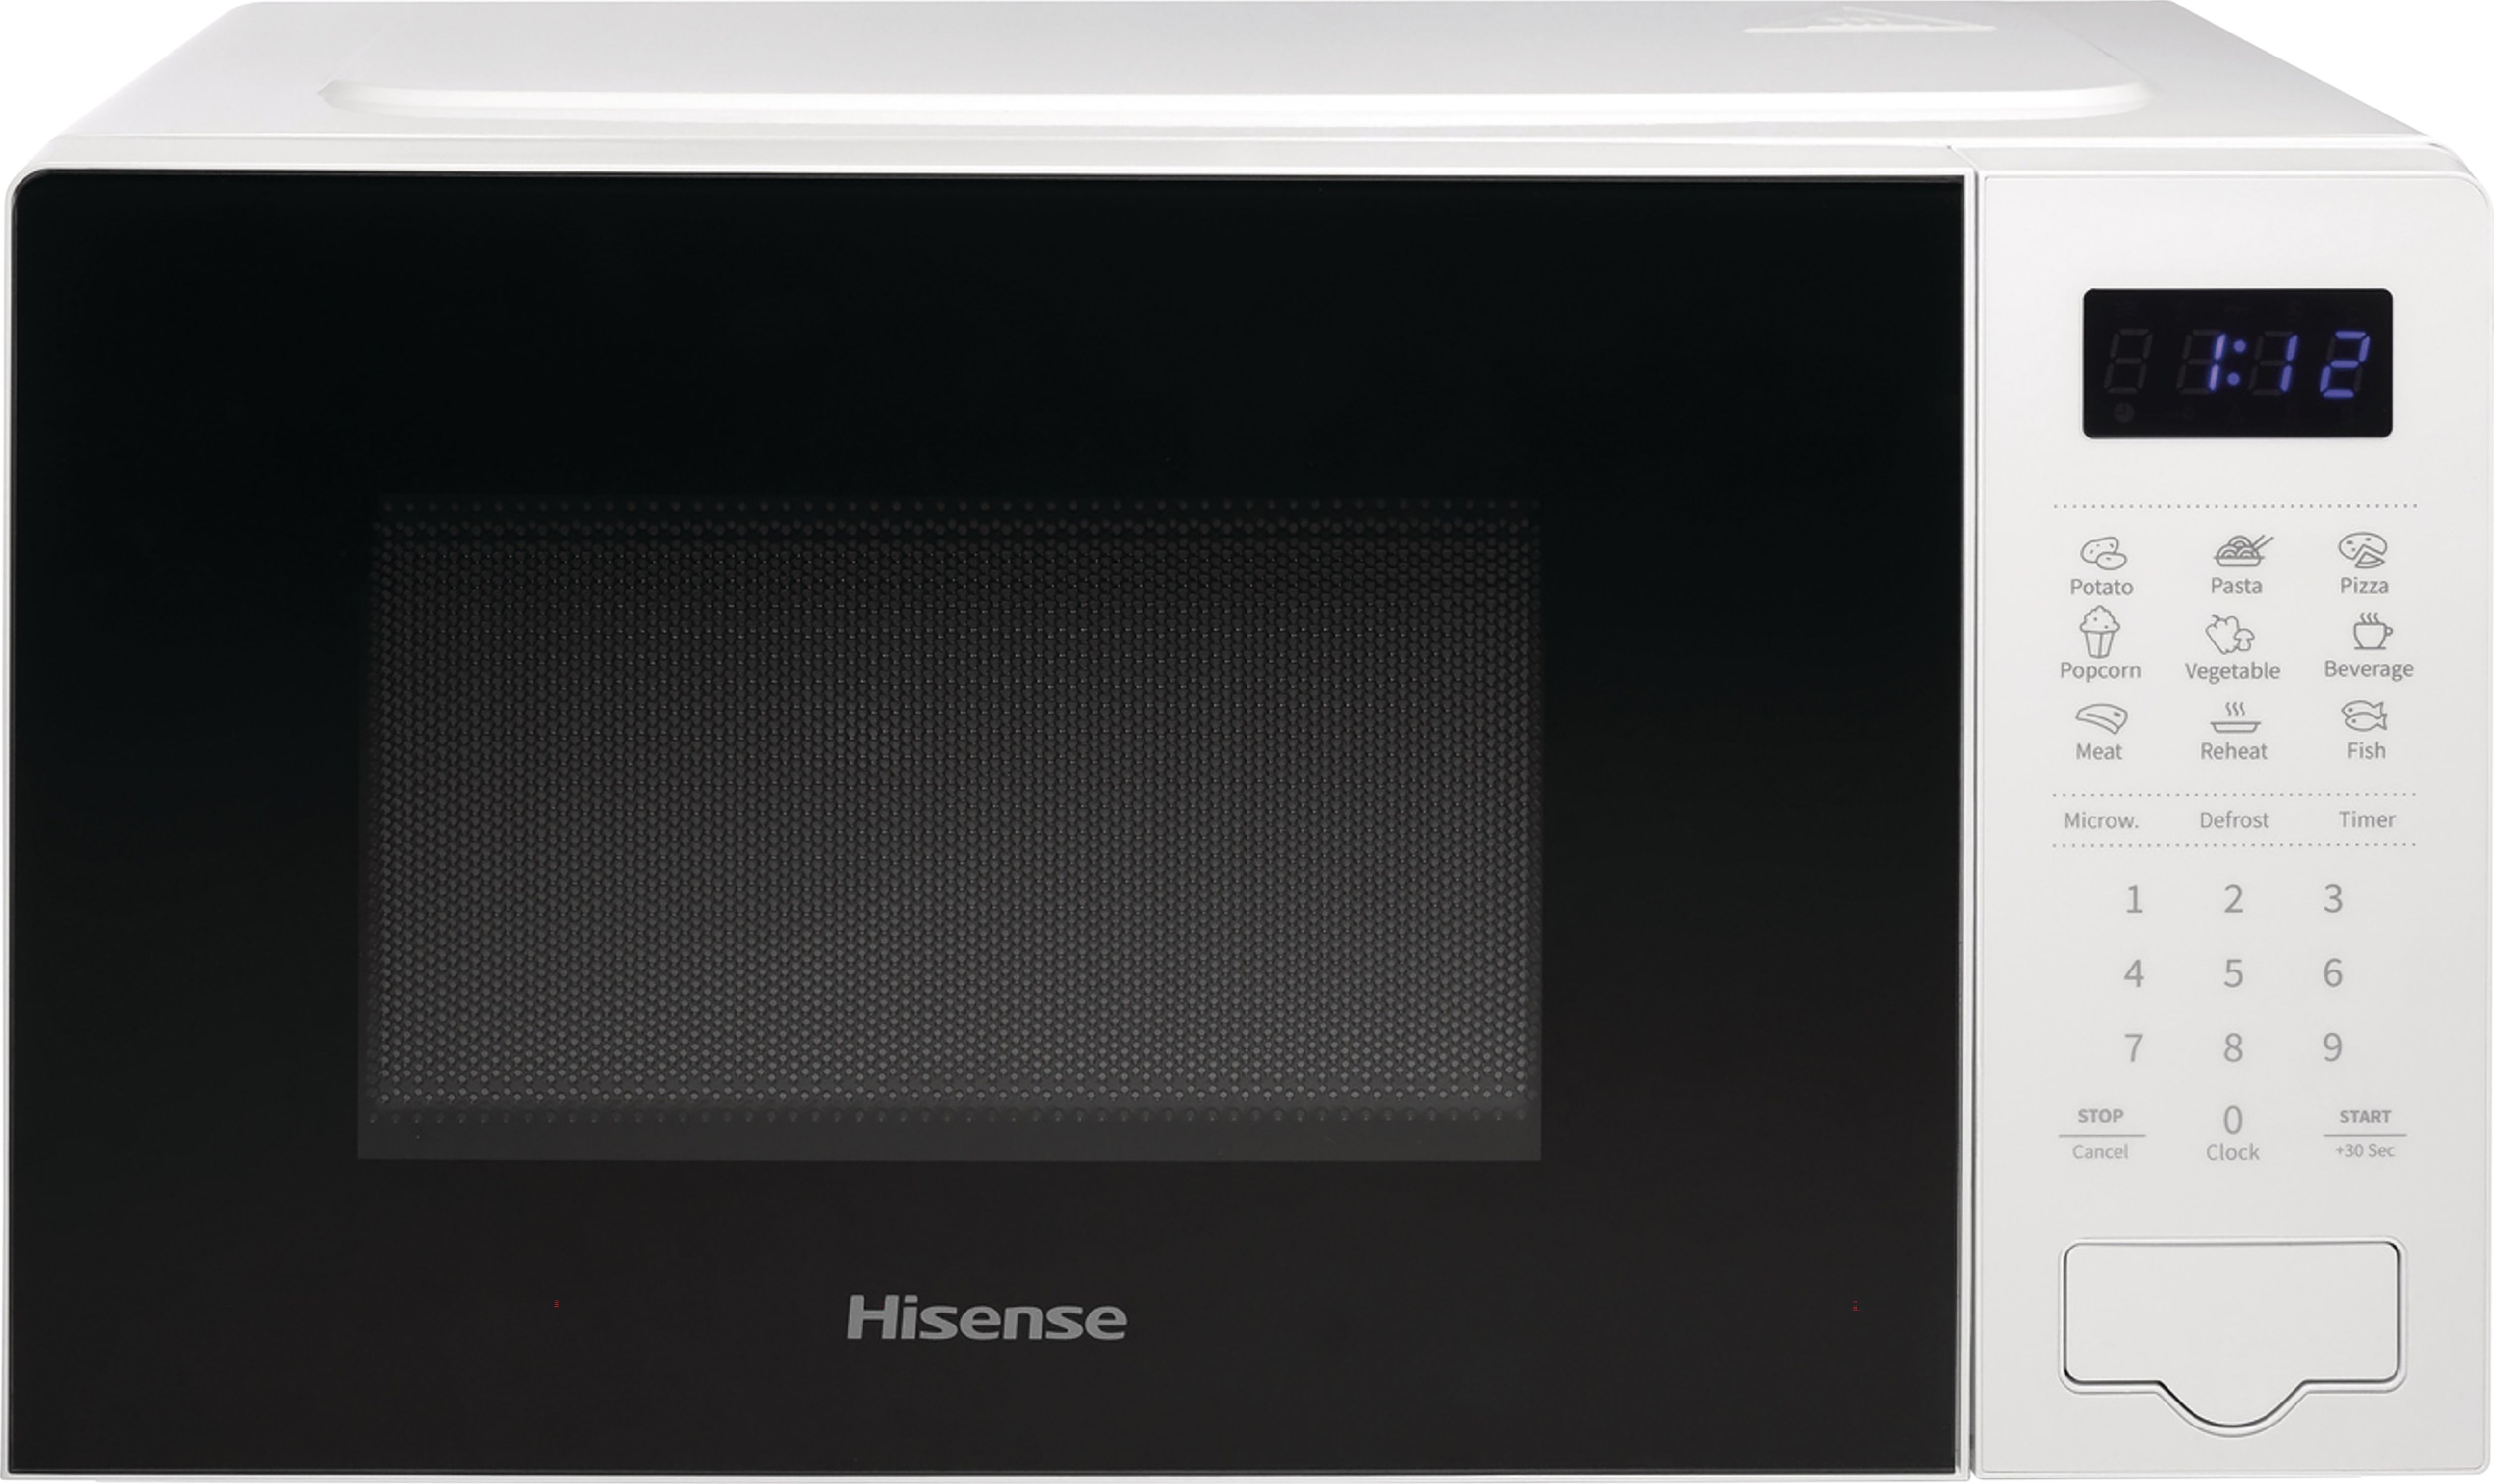 Hisense H20MOWS4UK 26cm tall, 46cm wide, Freestanding Compact Microwave - White, White